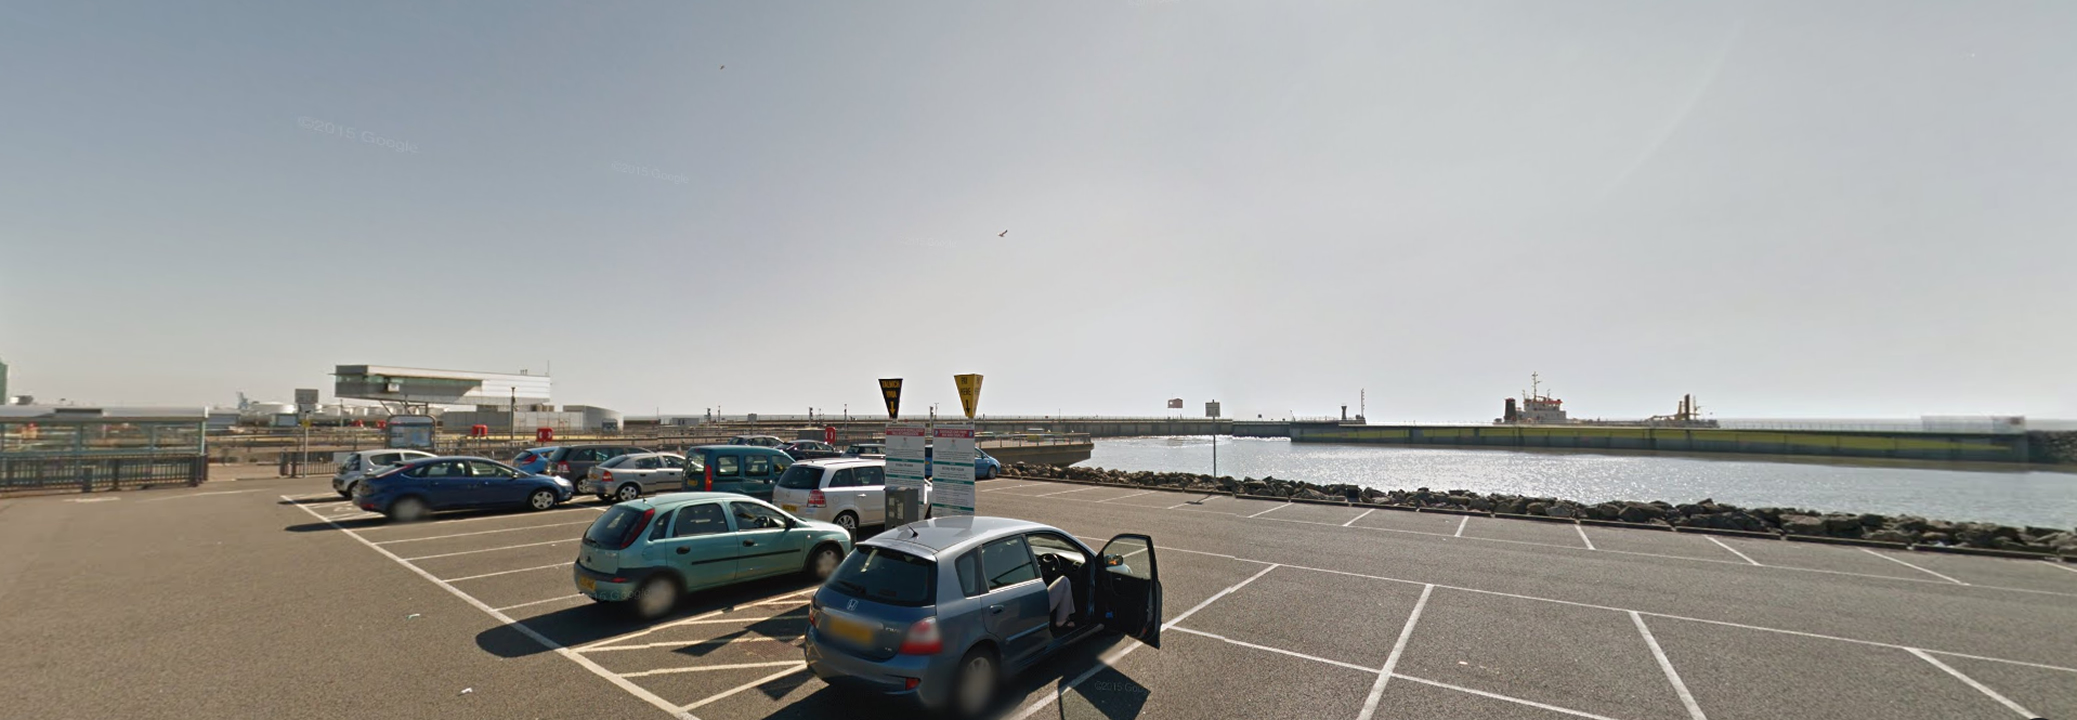 Car Parking - Cardiff Bay Rotary